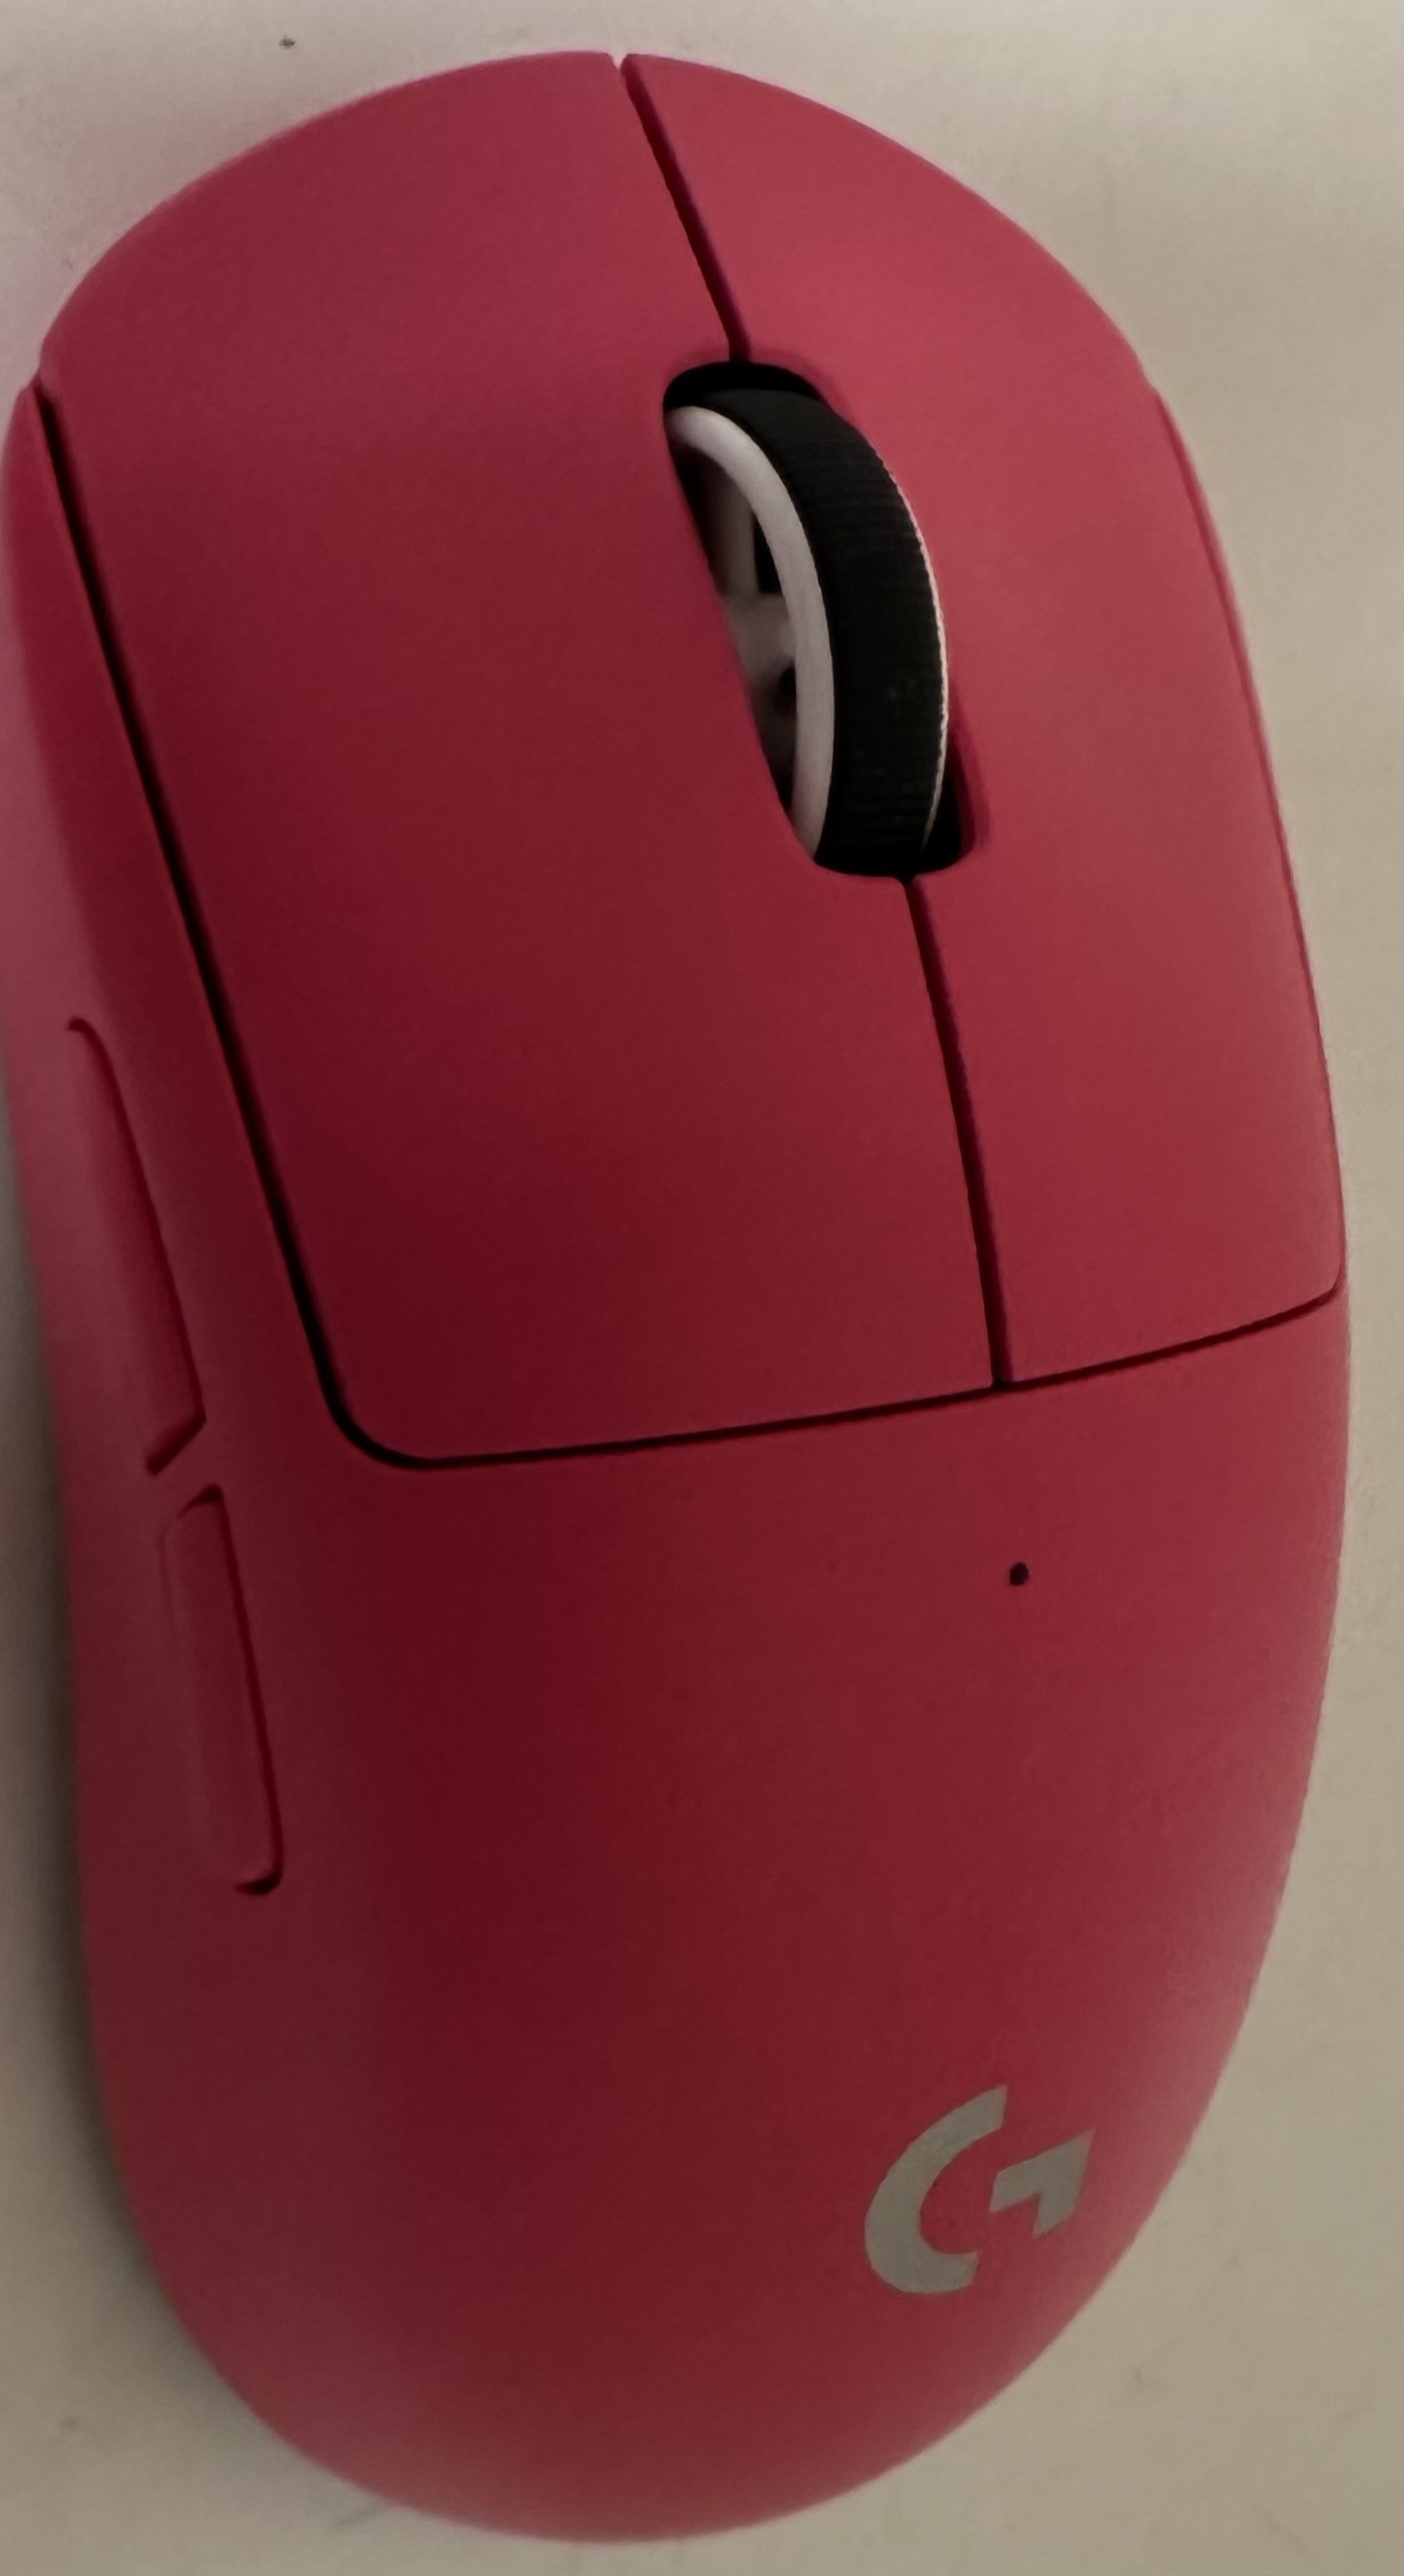 Logiteck Pro Mouse Pink 